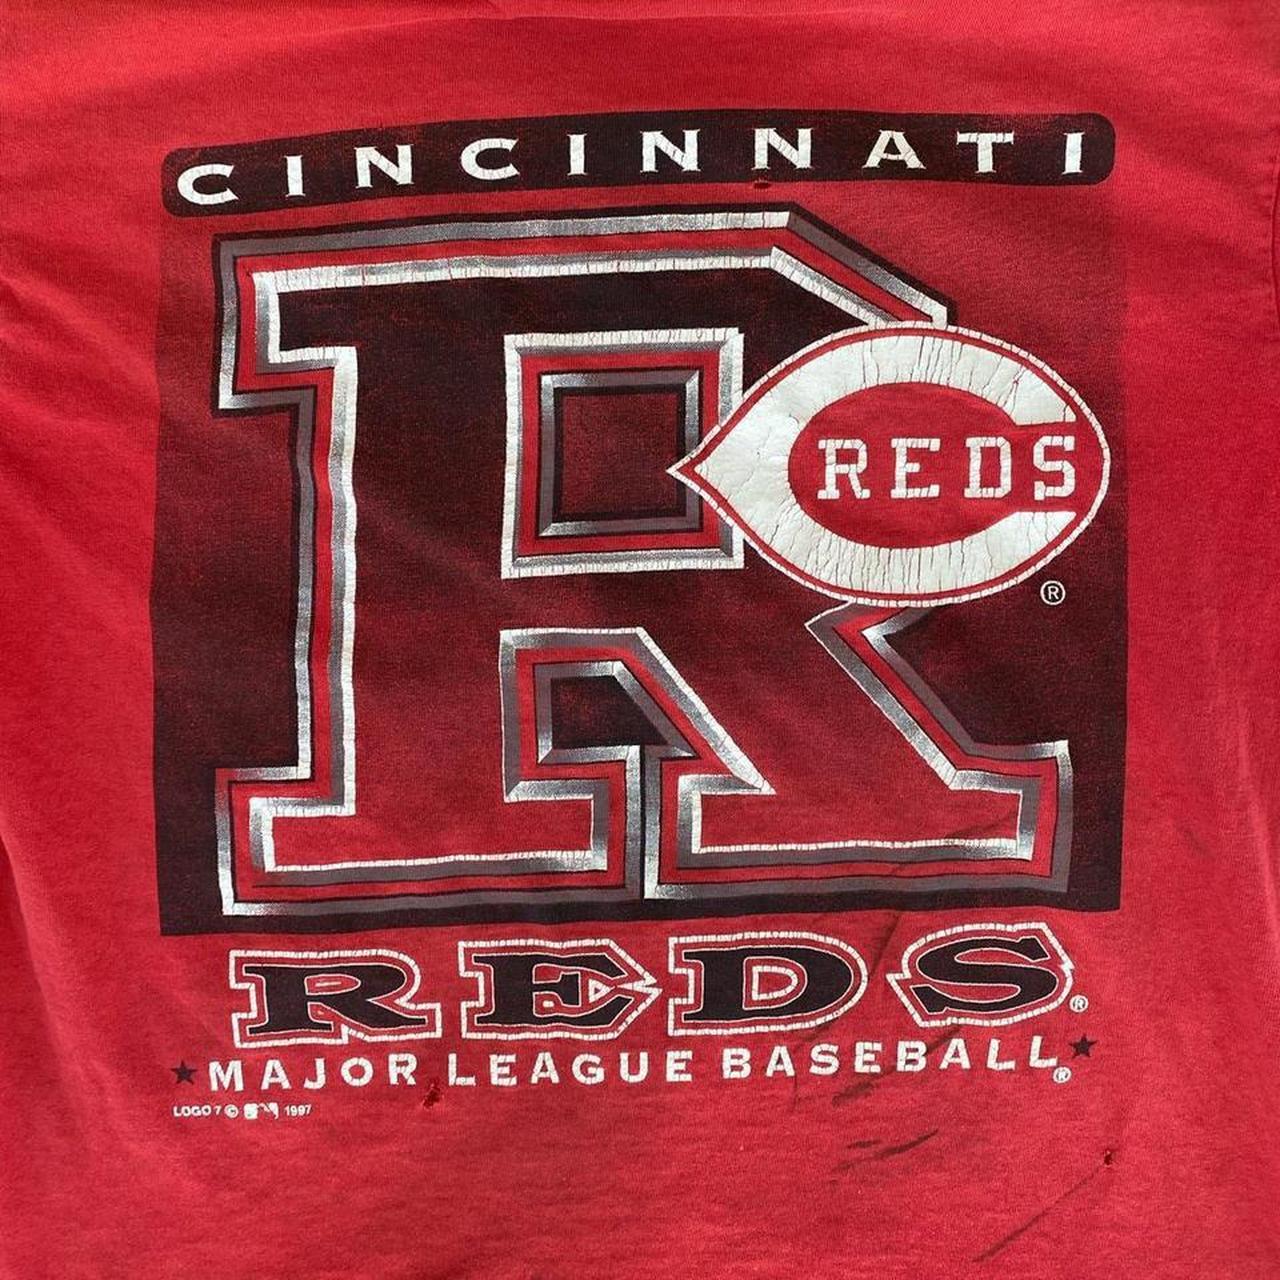 Vintage logo of Cincinnati Reds, American professional baseball